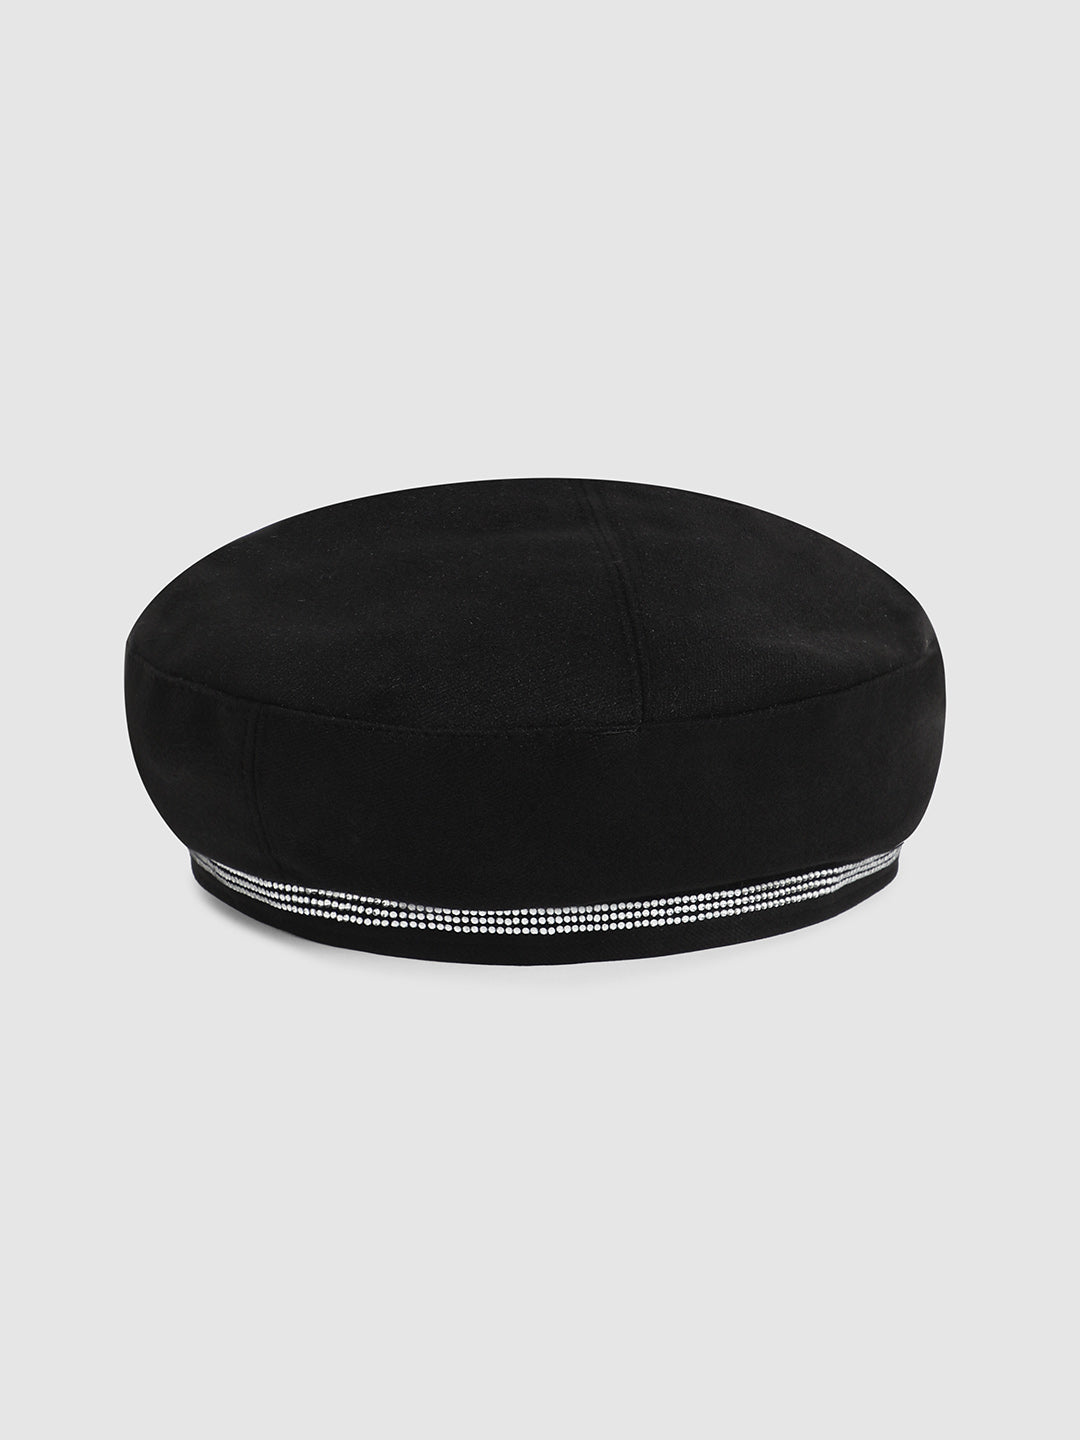 Rhinestone Lined Beret Hat - Black